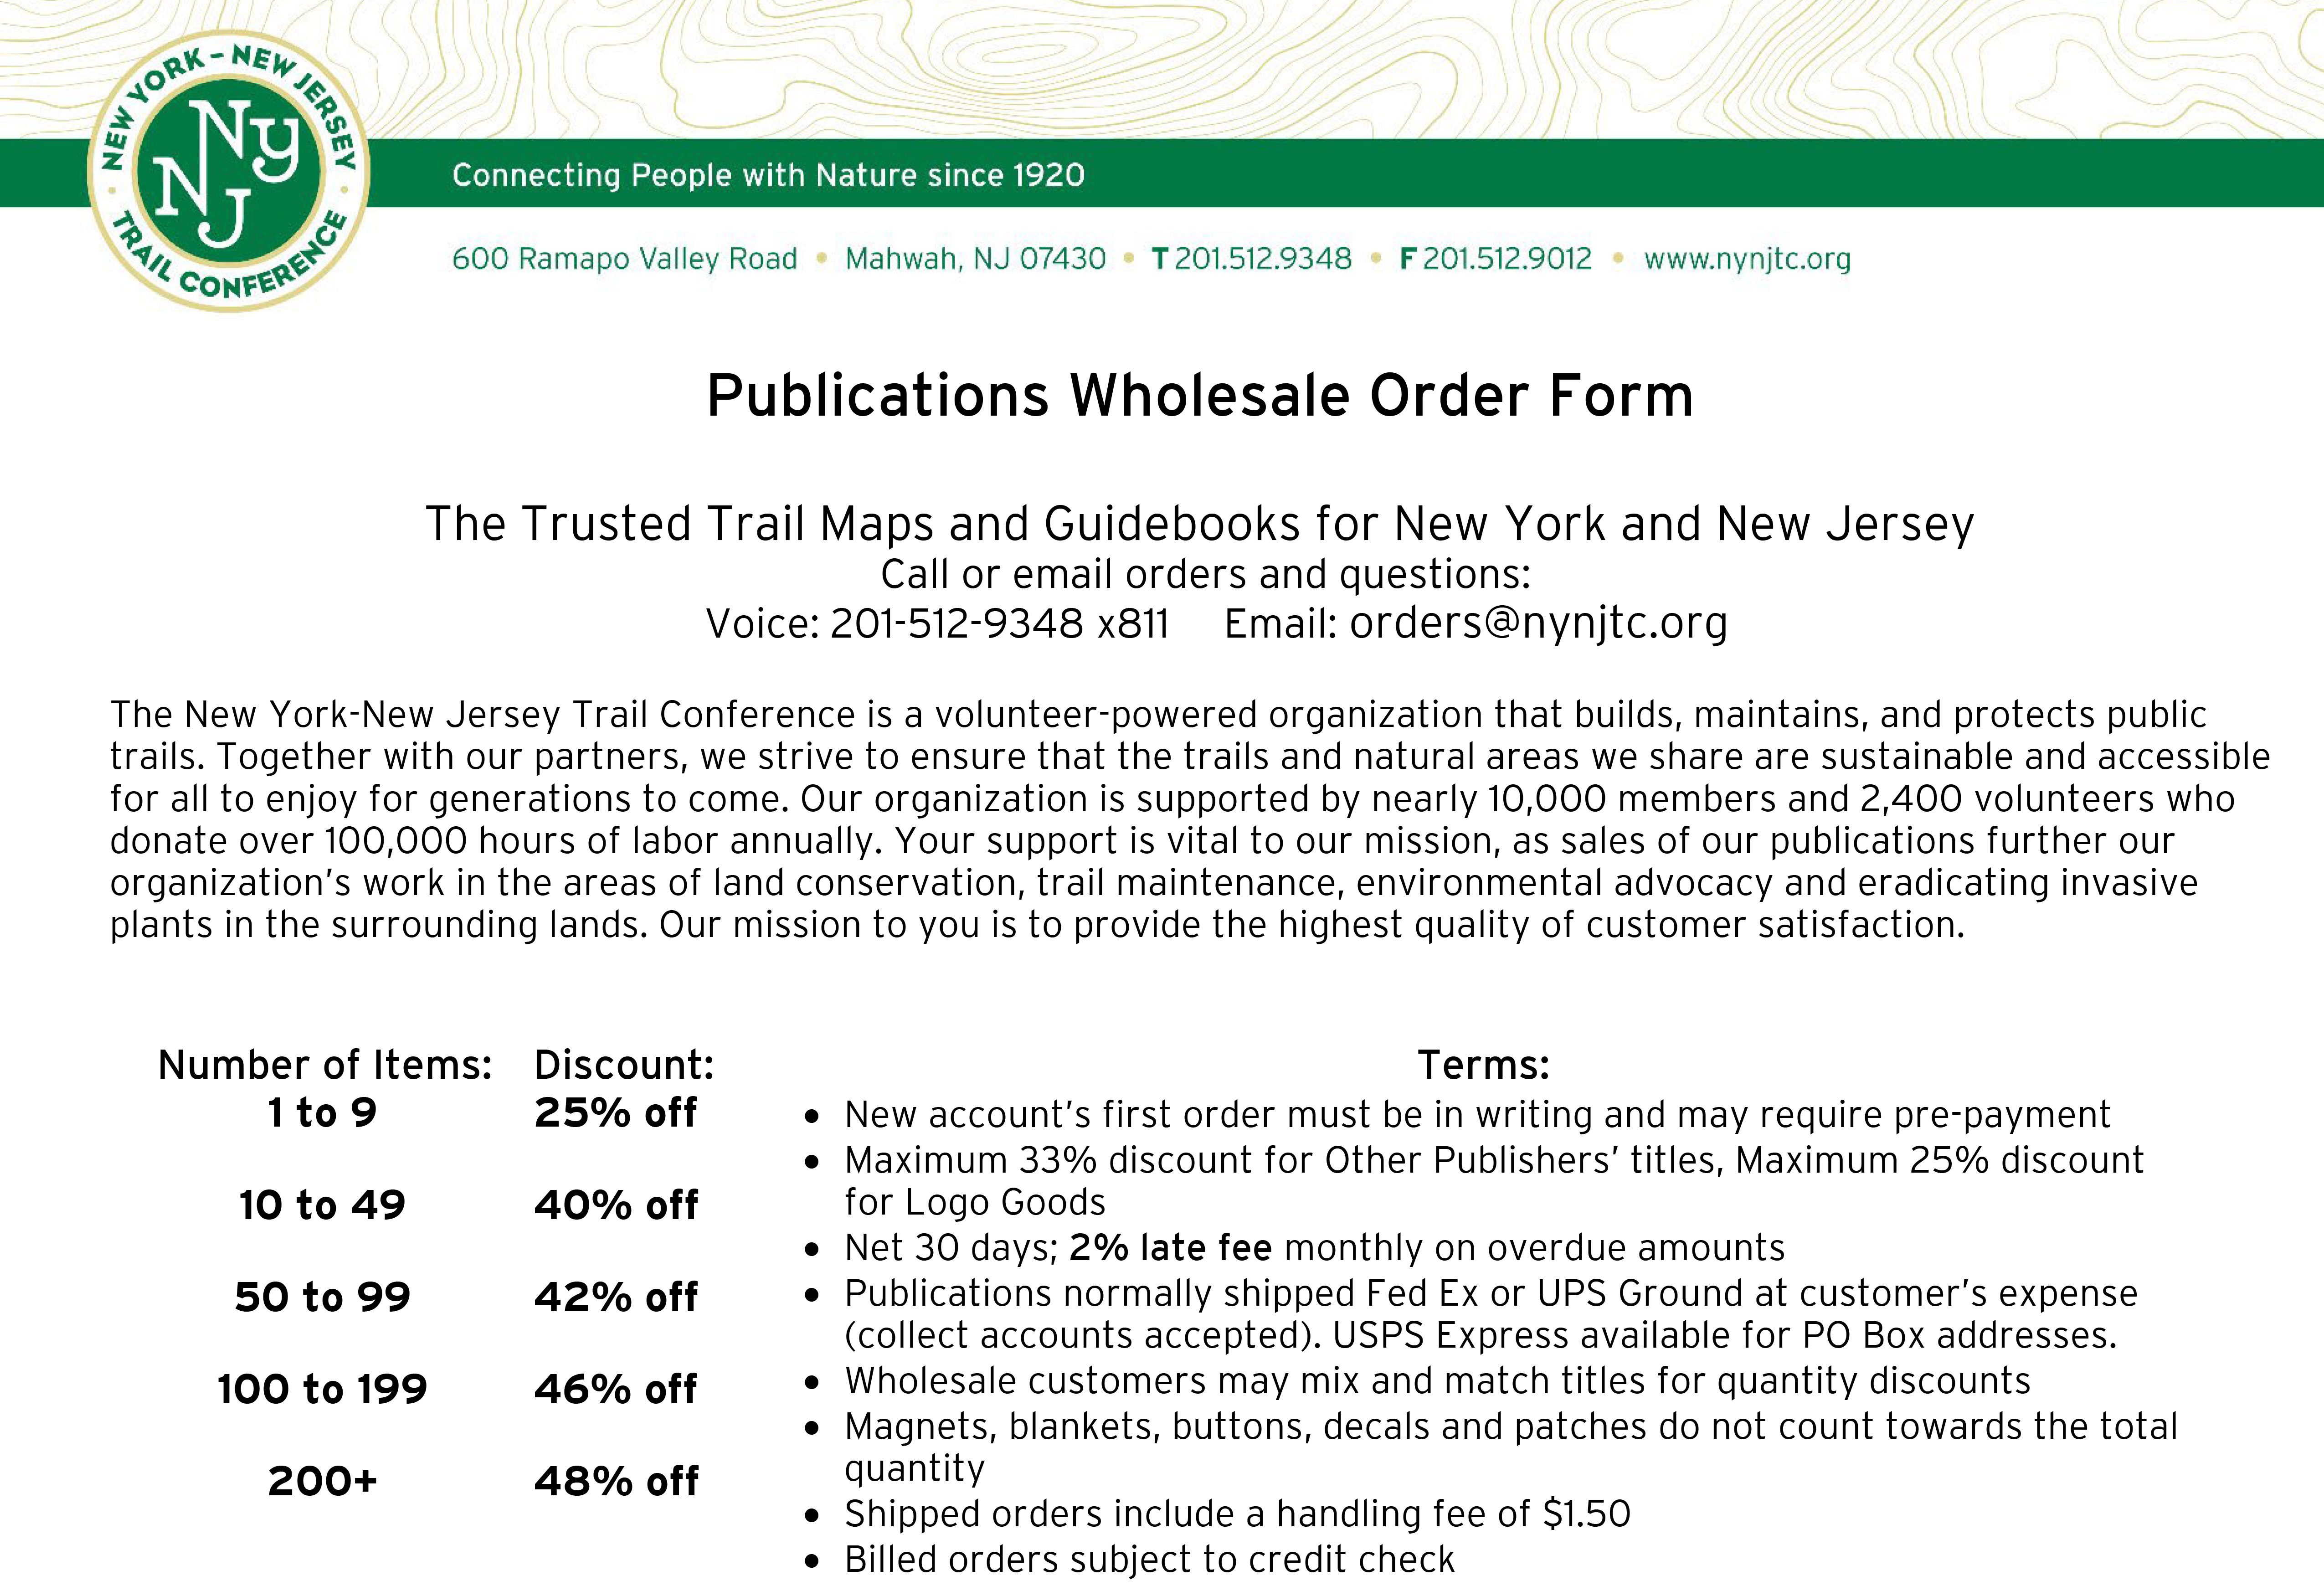 Wholesale Order Form Image